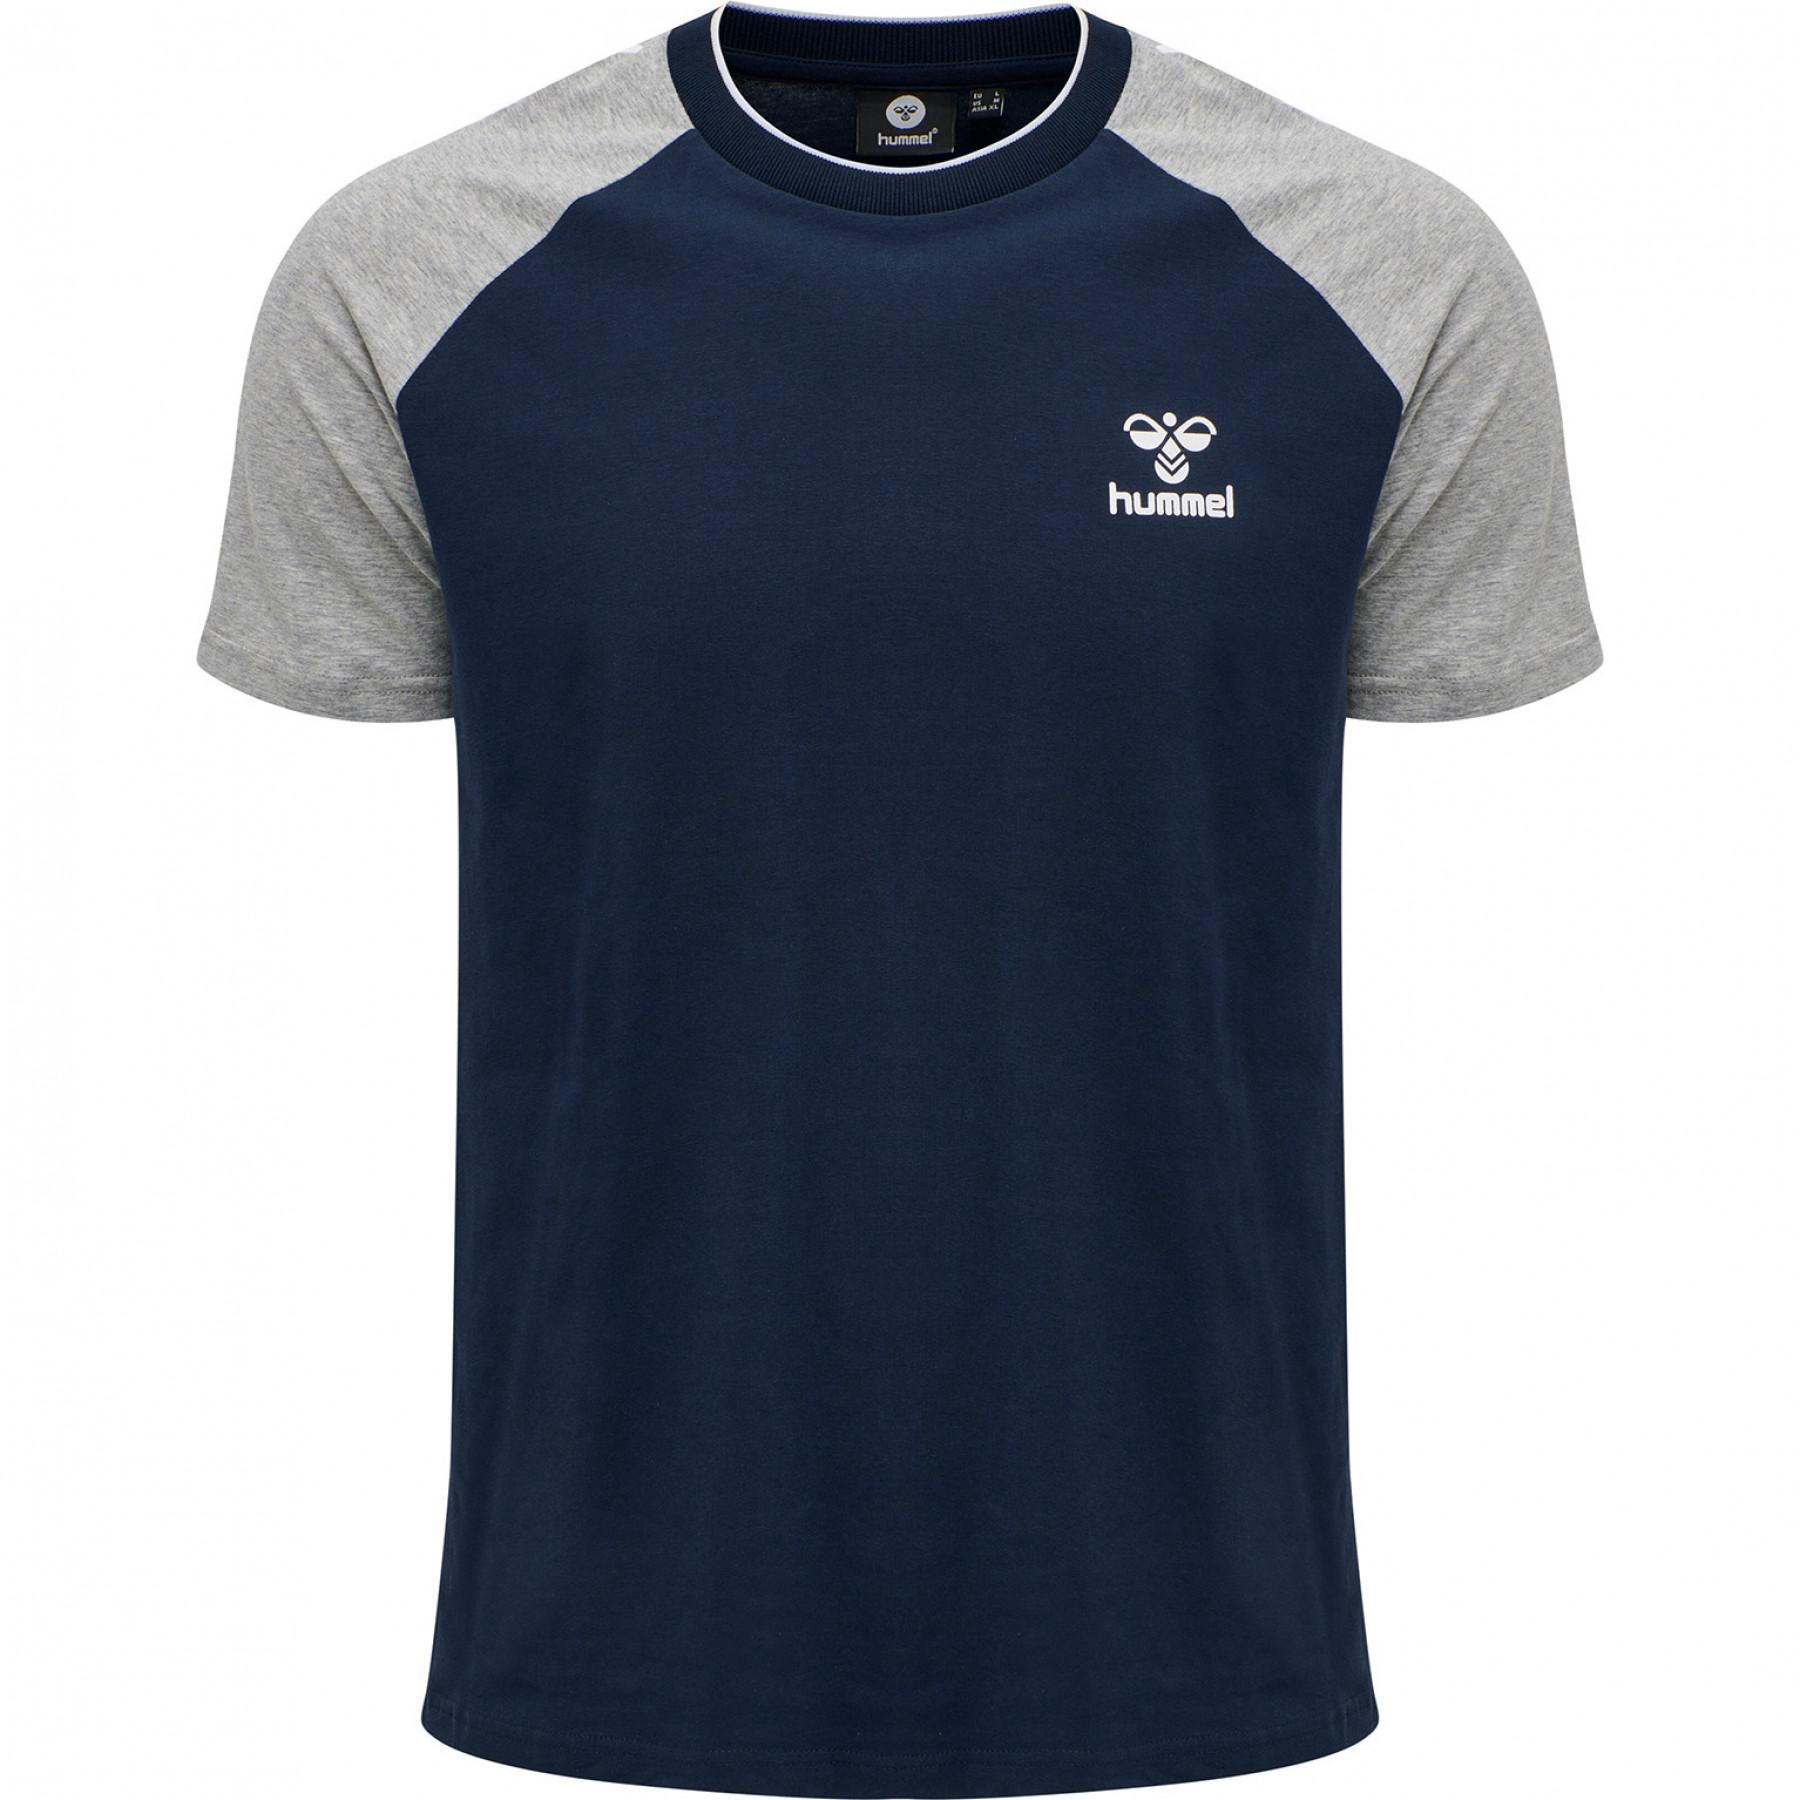 T-shirt Hummel and Handball polos - - hmlmark T-shirts Textile - wear